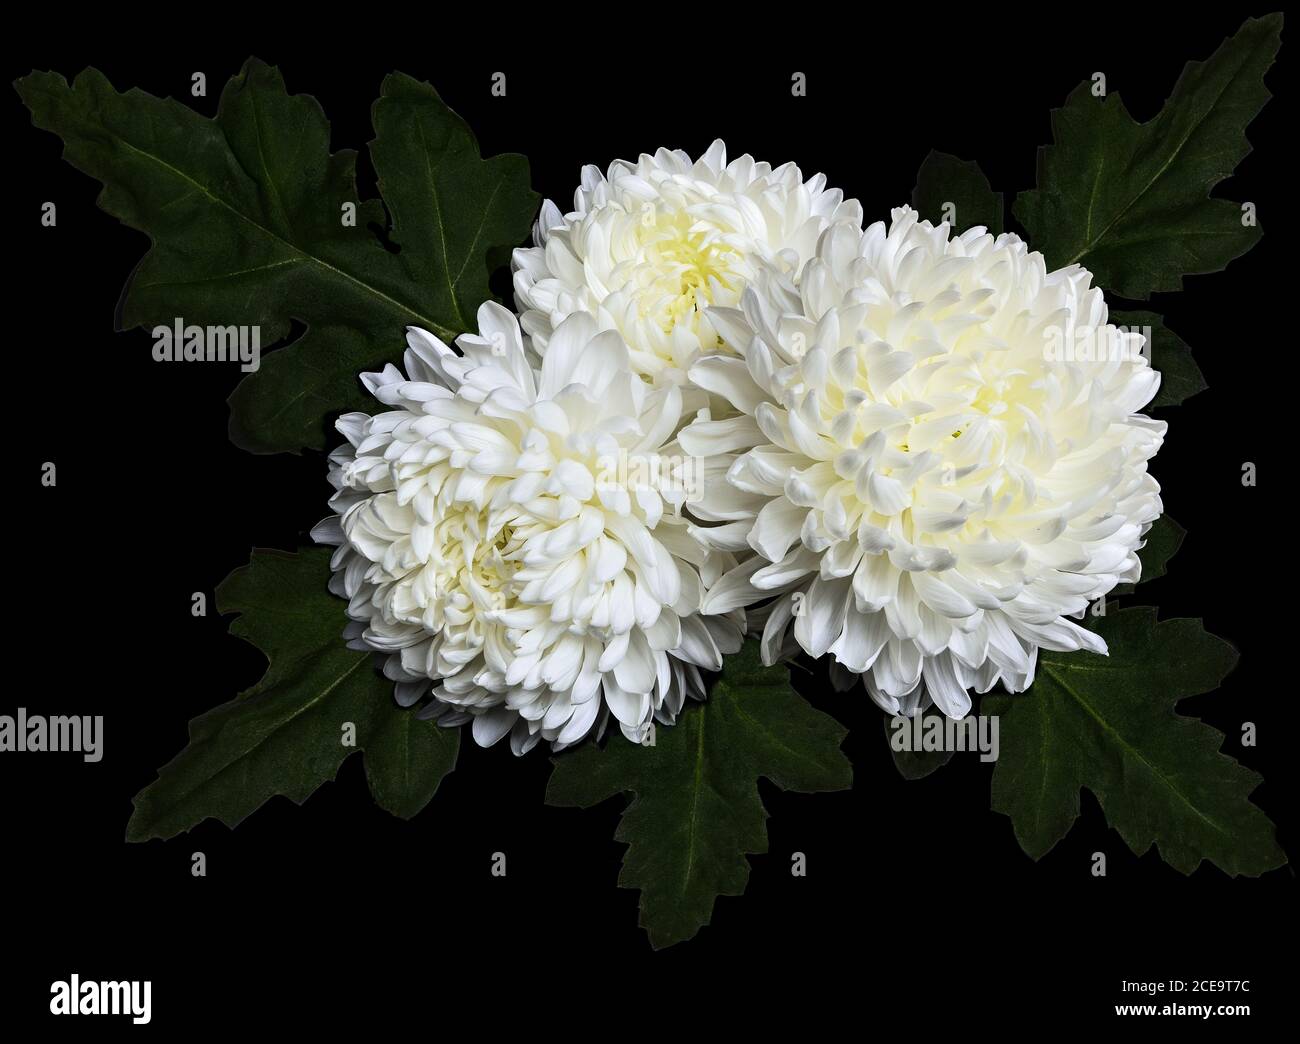 Three White Chrysanthemum Flowers close up on Black Background Stock Photo